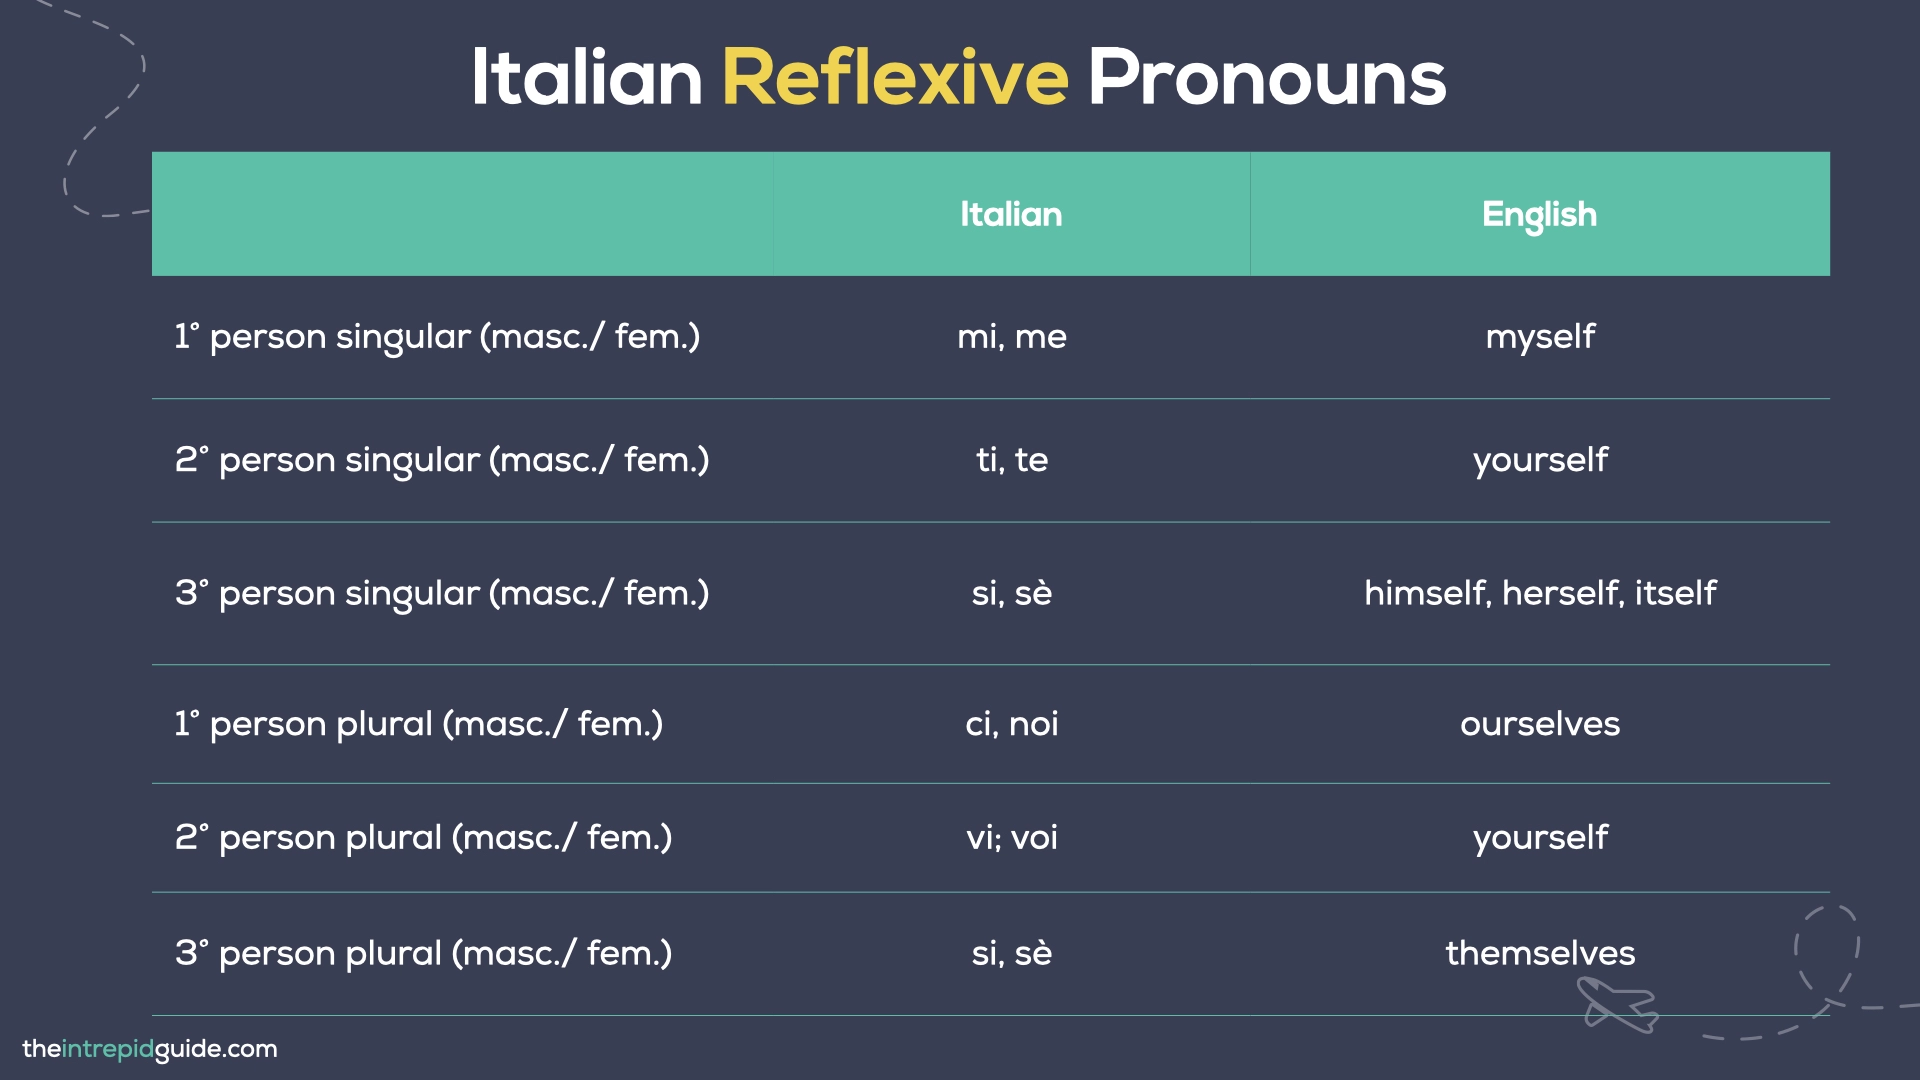 Italian Pronouns - Italian Reflexive Pronouns Chart